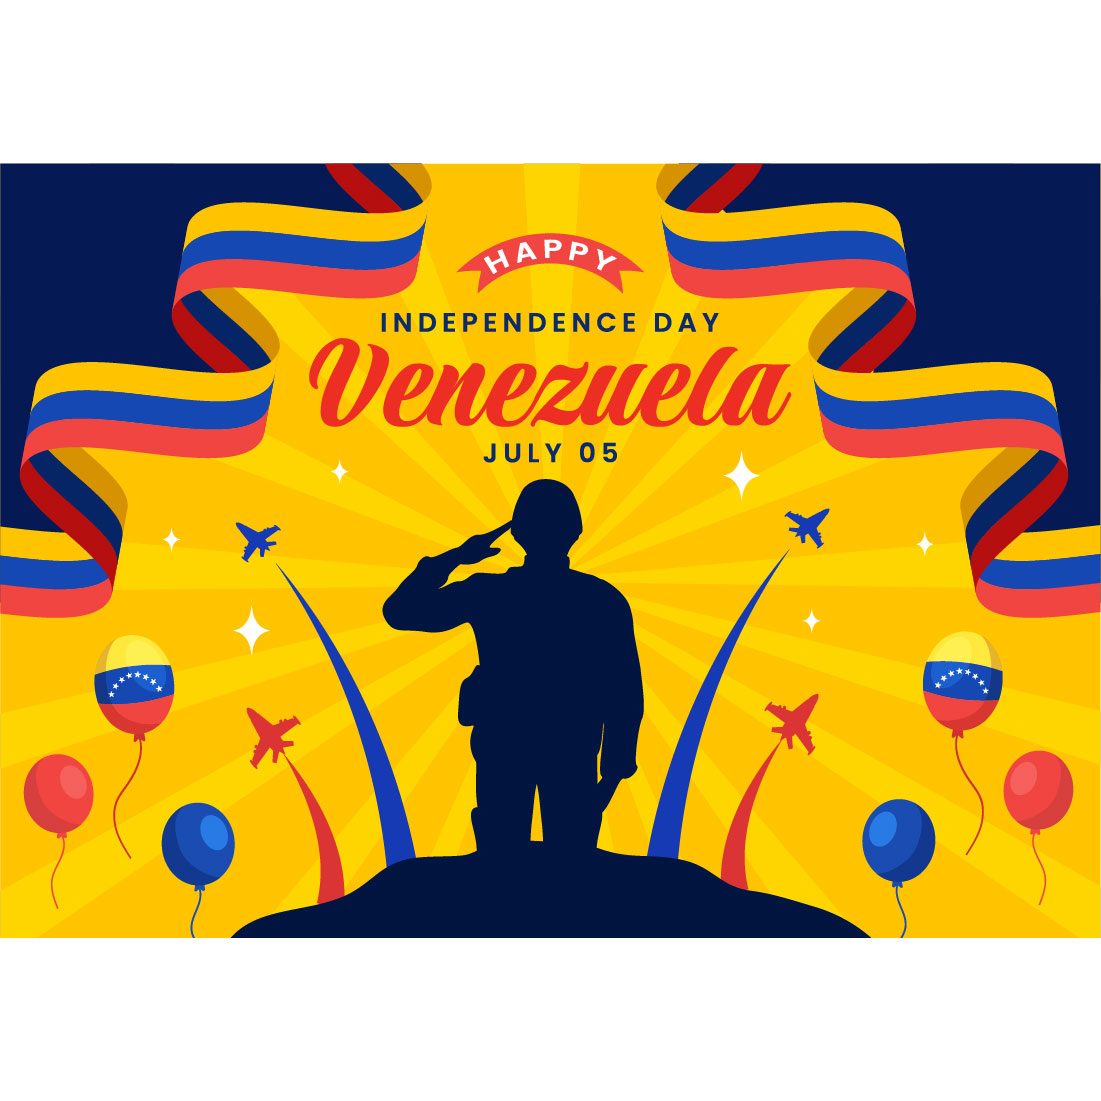 13 Venezuela Independence Day Illustration preview image.